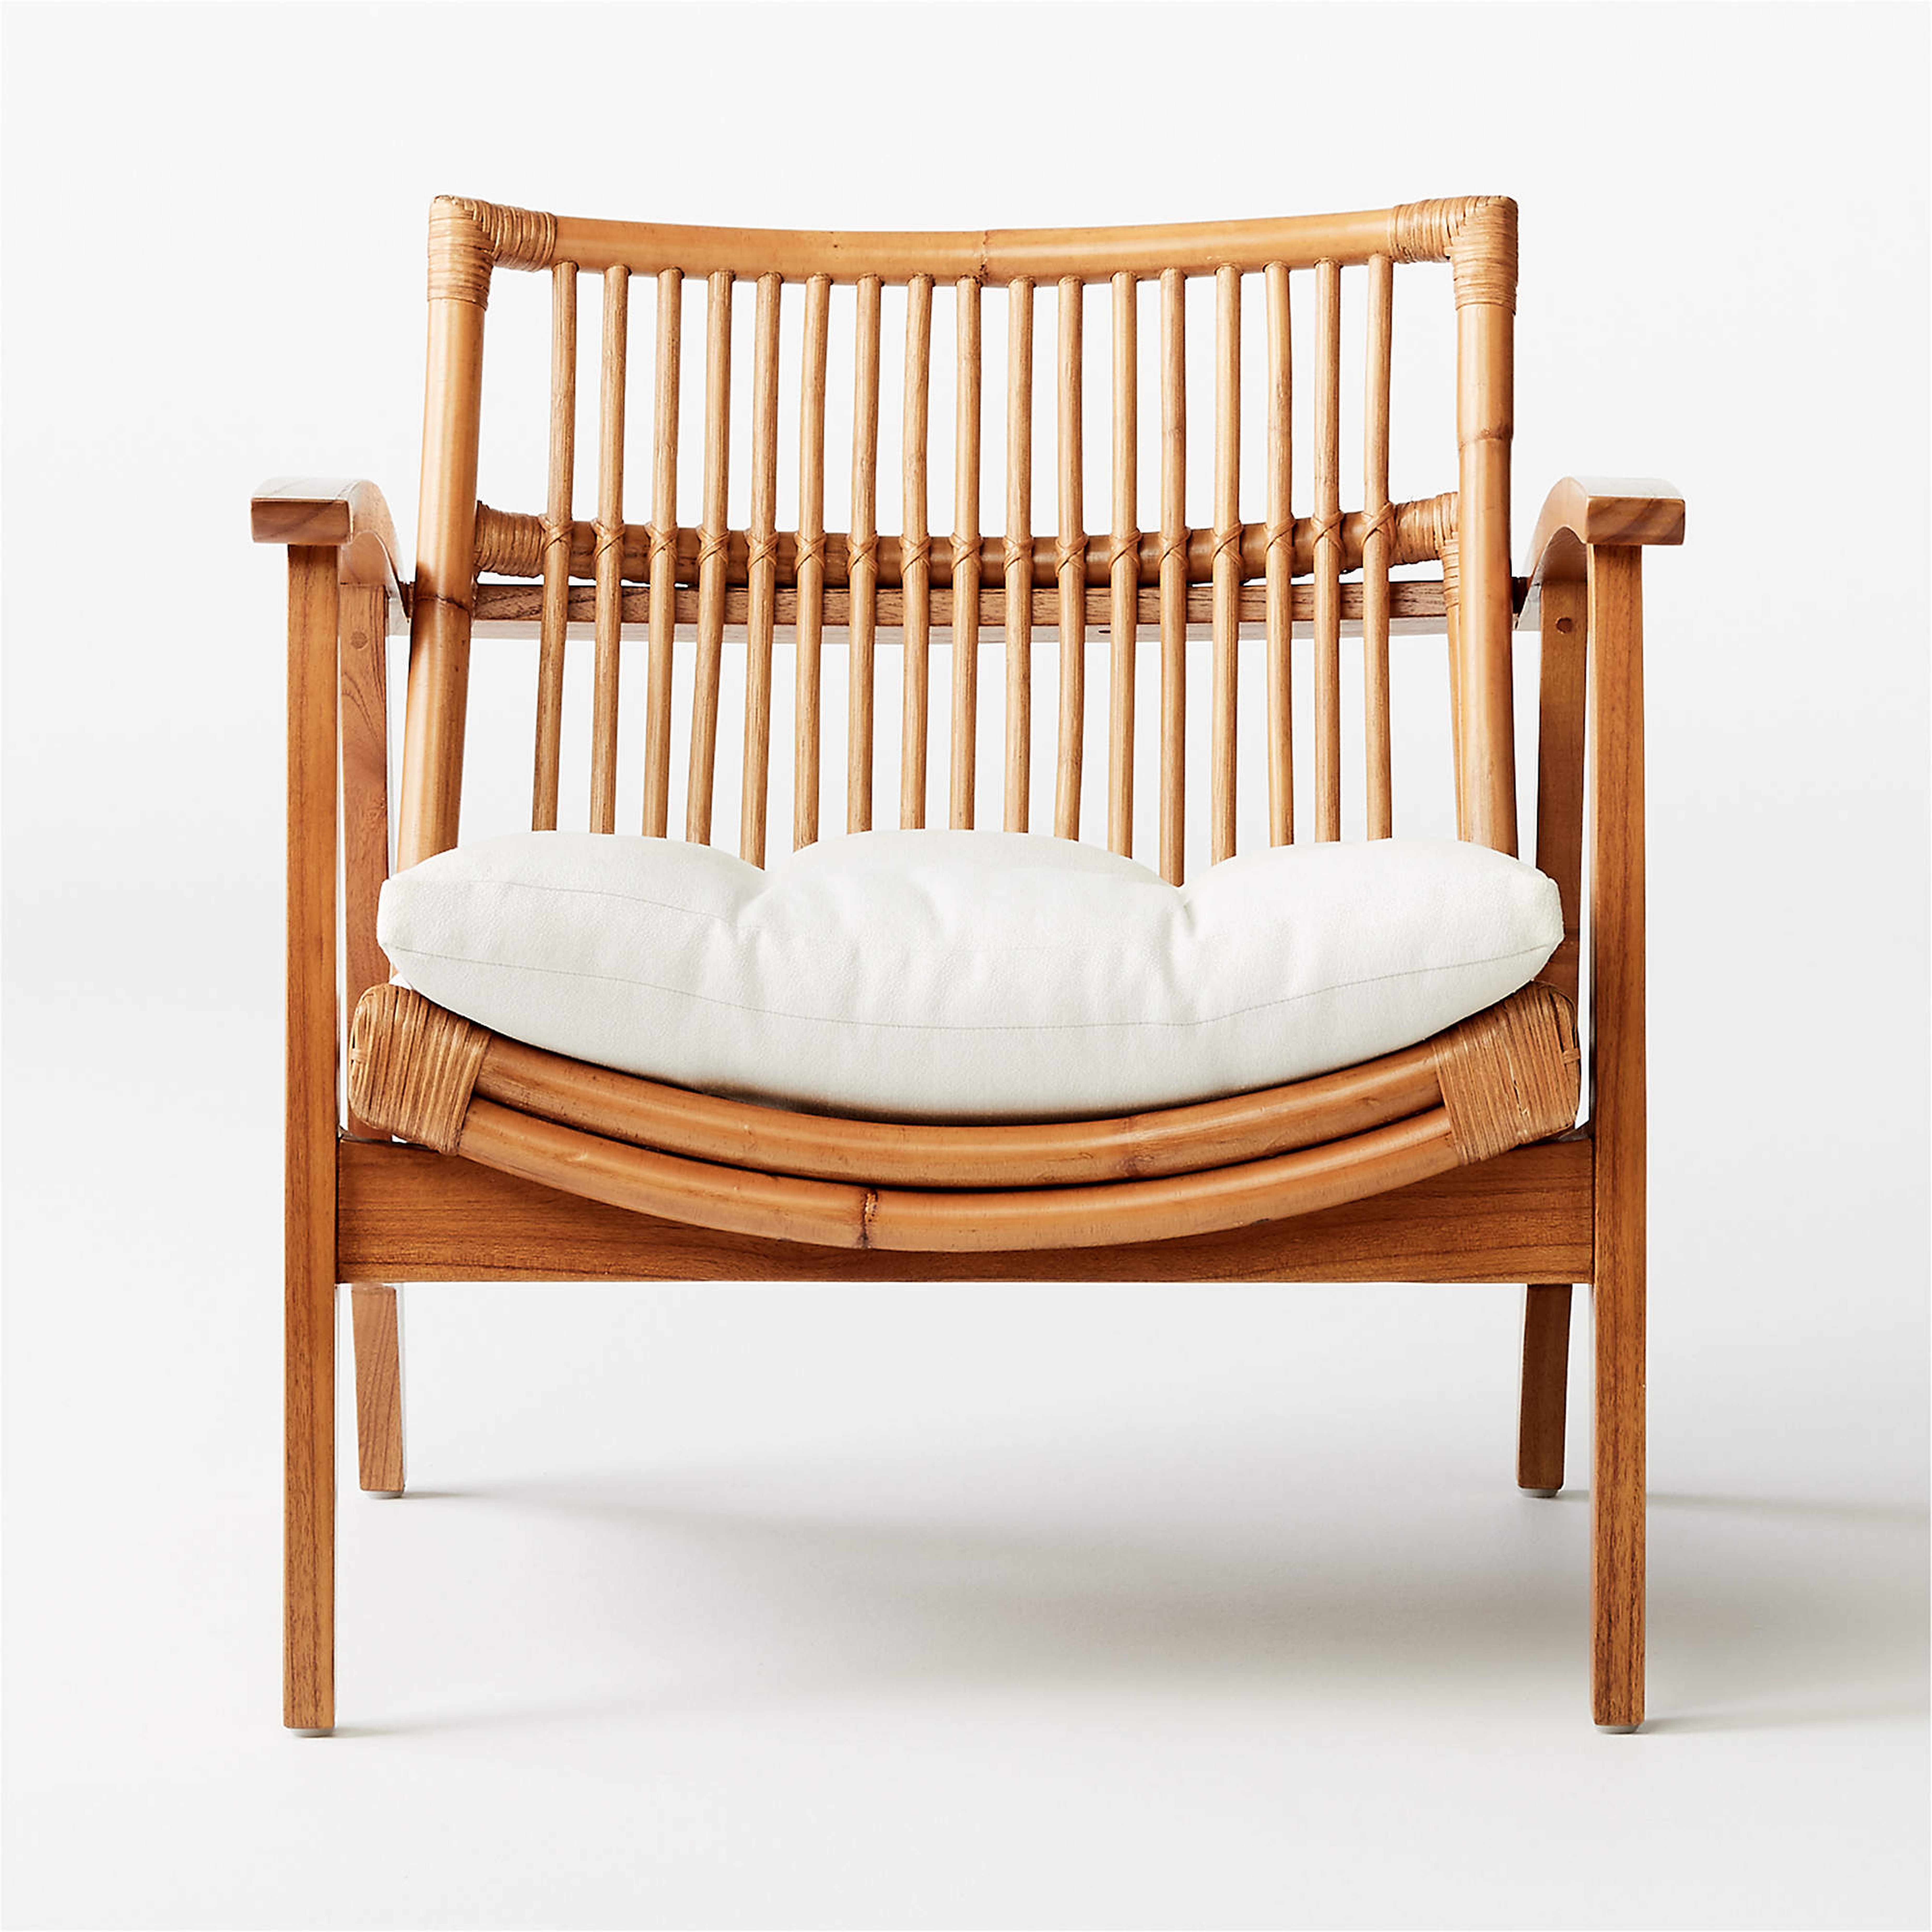 Noelie Rattan Lounge Chair with White Cushion, Mikkeli White - CB2